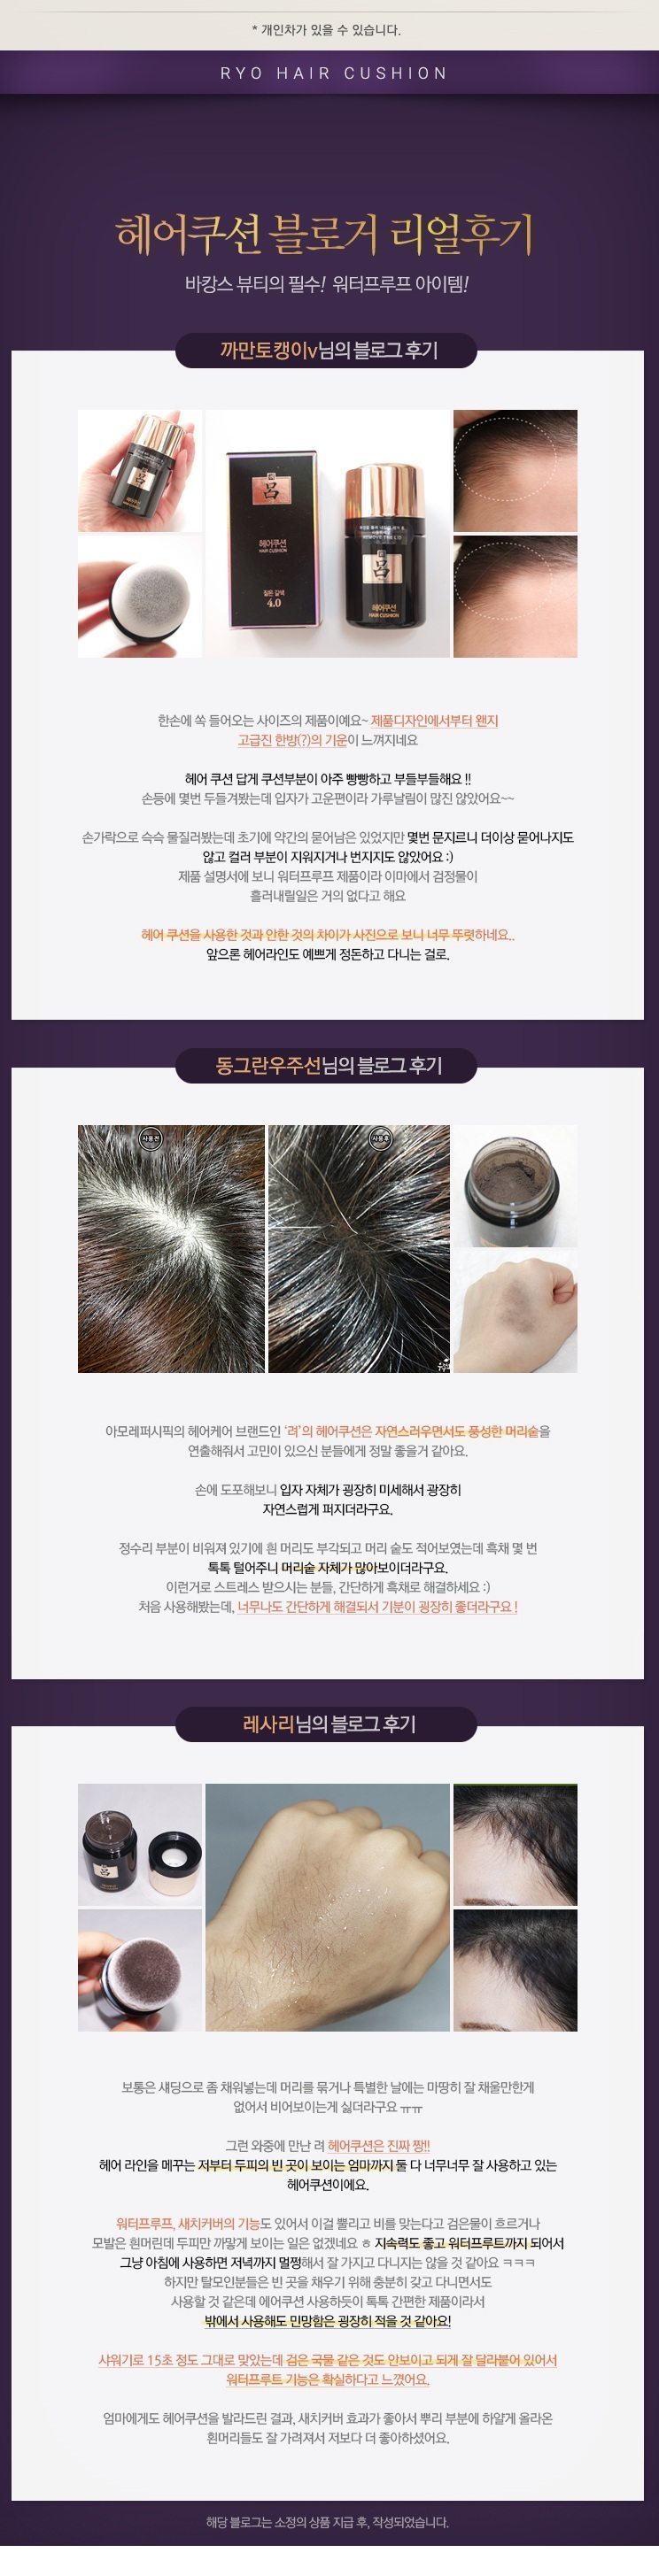 Ryo Hair Cushion korean cosmetic bodyhair product online shop malaysia taiwan spain3